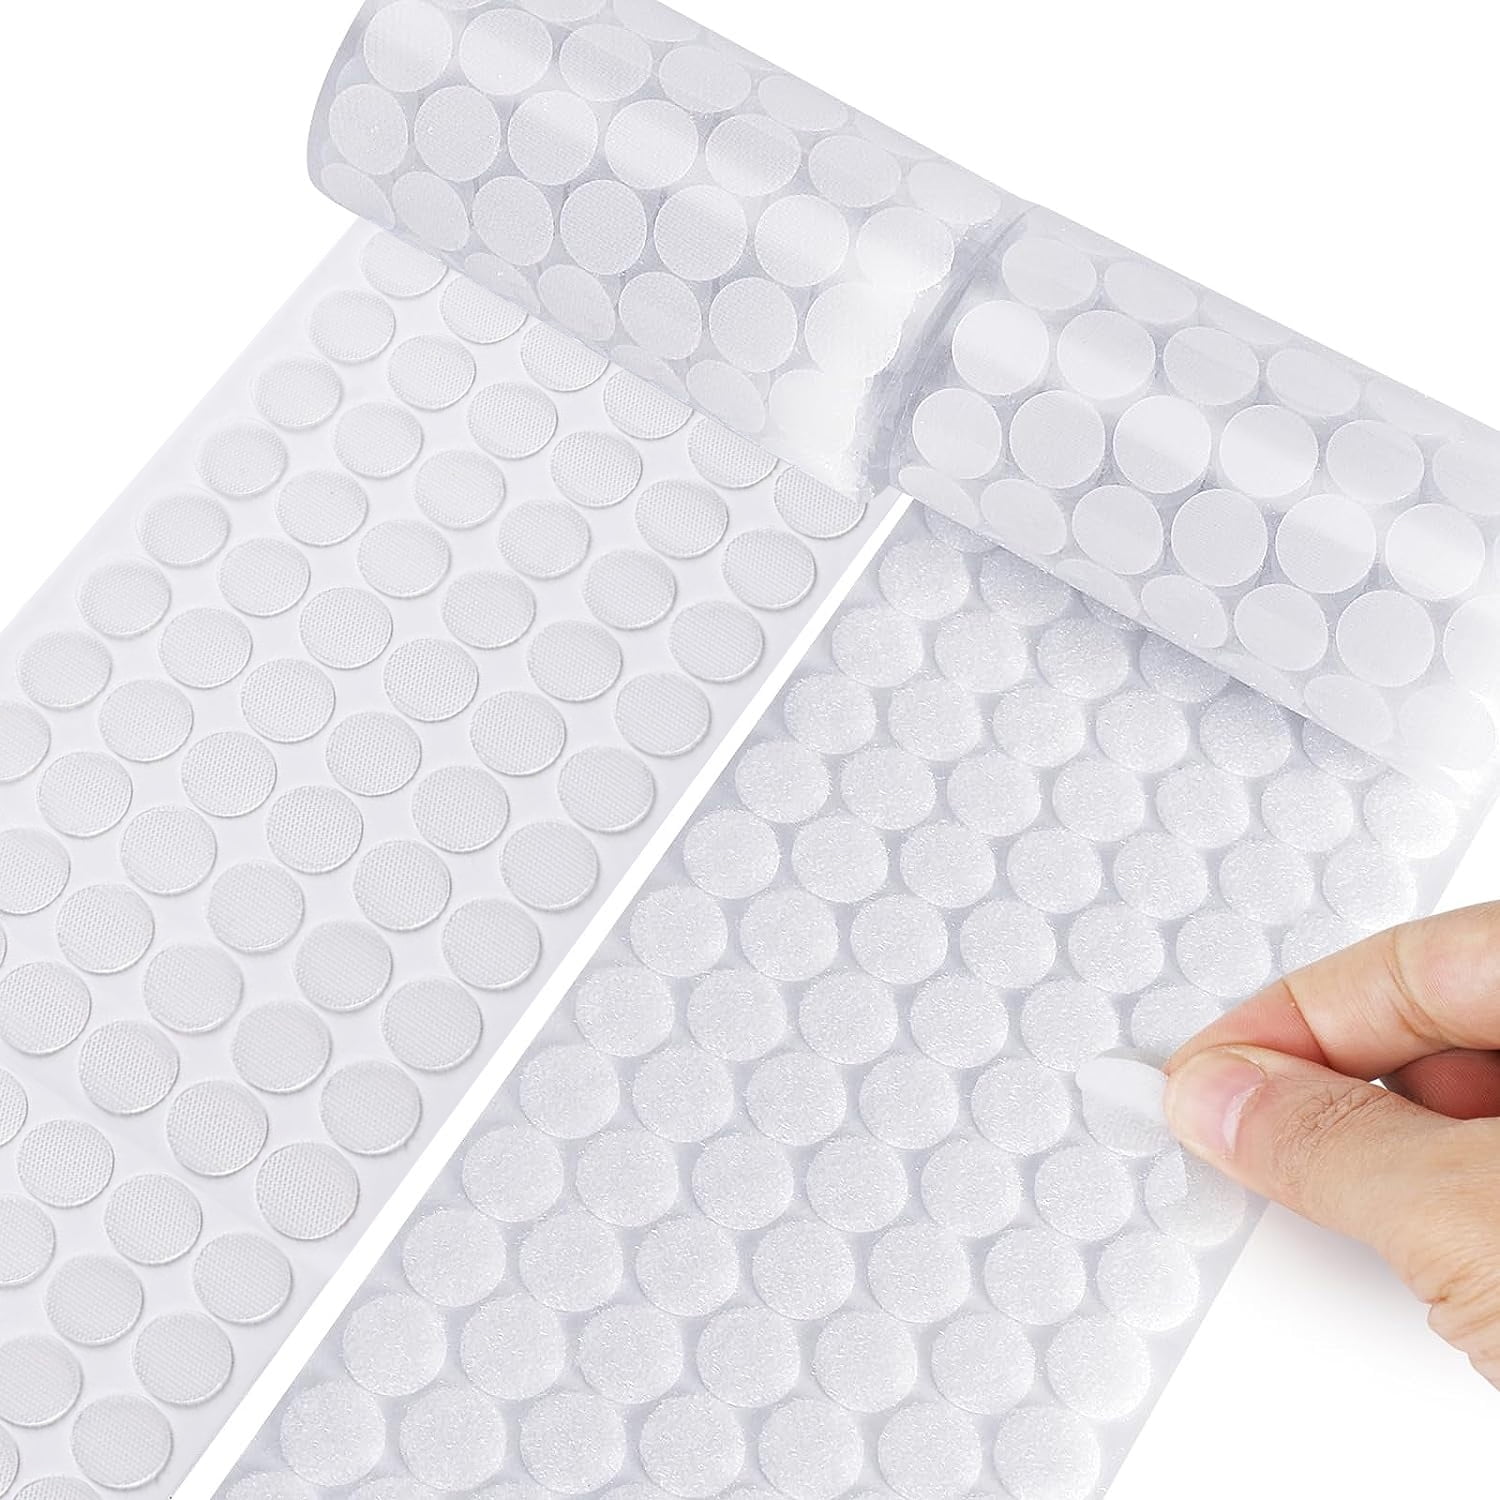 SOAC 10pcs Adhesive Back Felt Sheets Fabric Sheets Self-Adhesive Durable Multi-Purpose for Art Making DIY Craft (Random Color), Size: 30x20cm